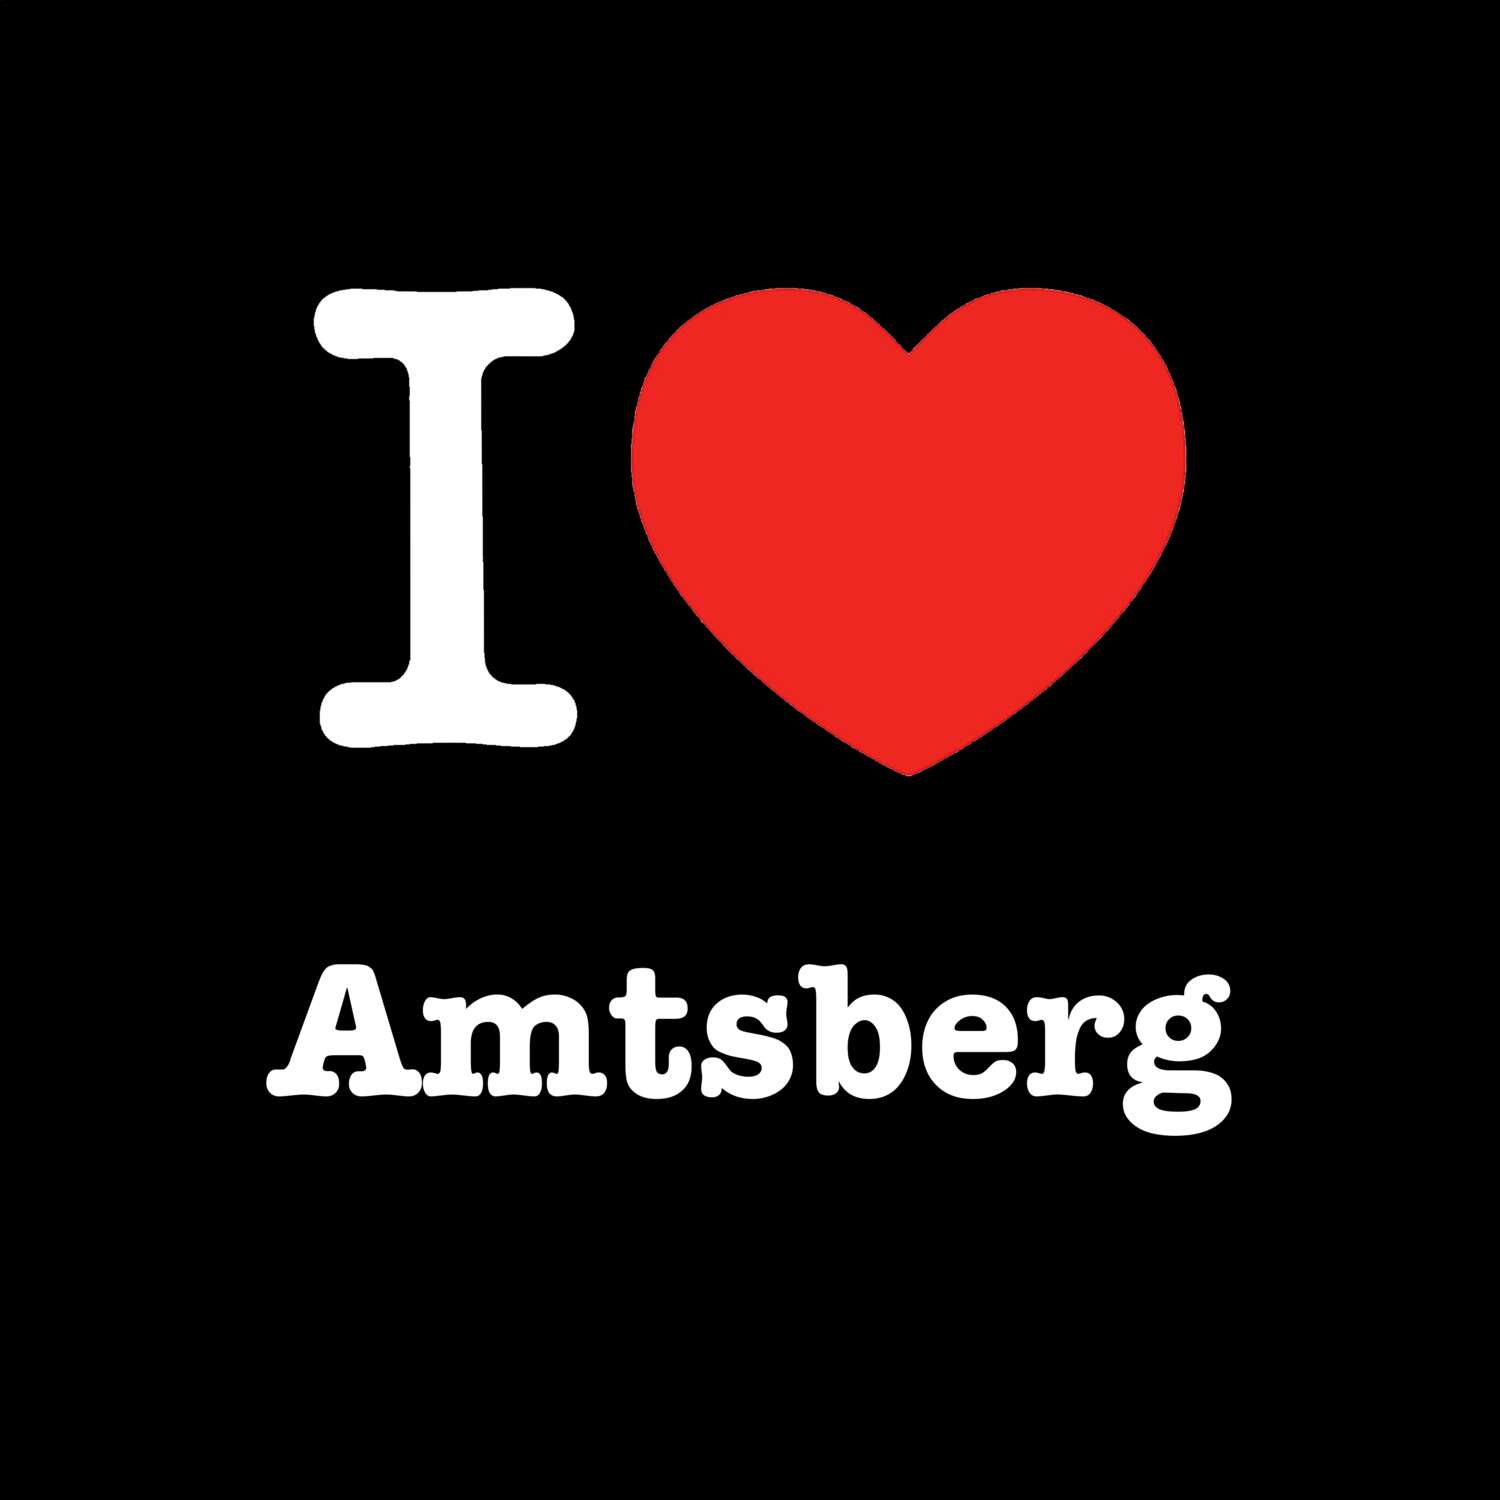 Amtsberg T-Shirt »I love«